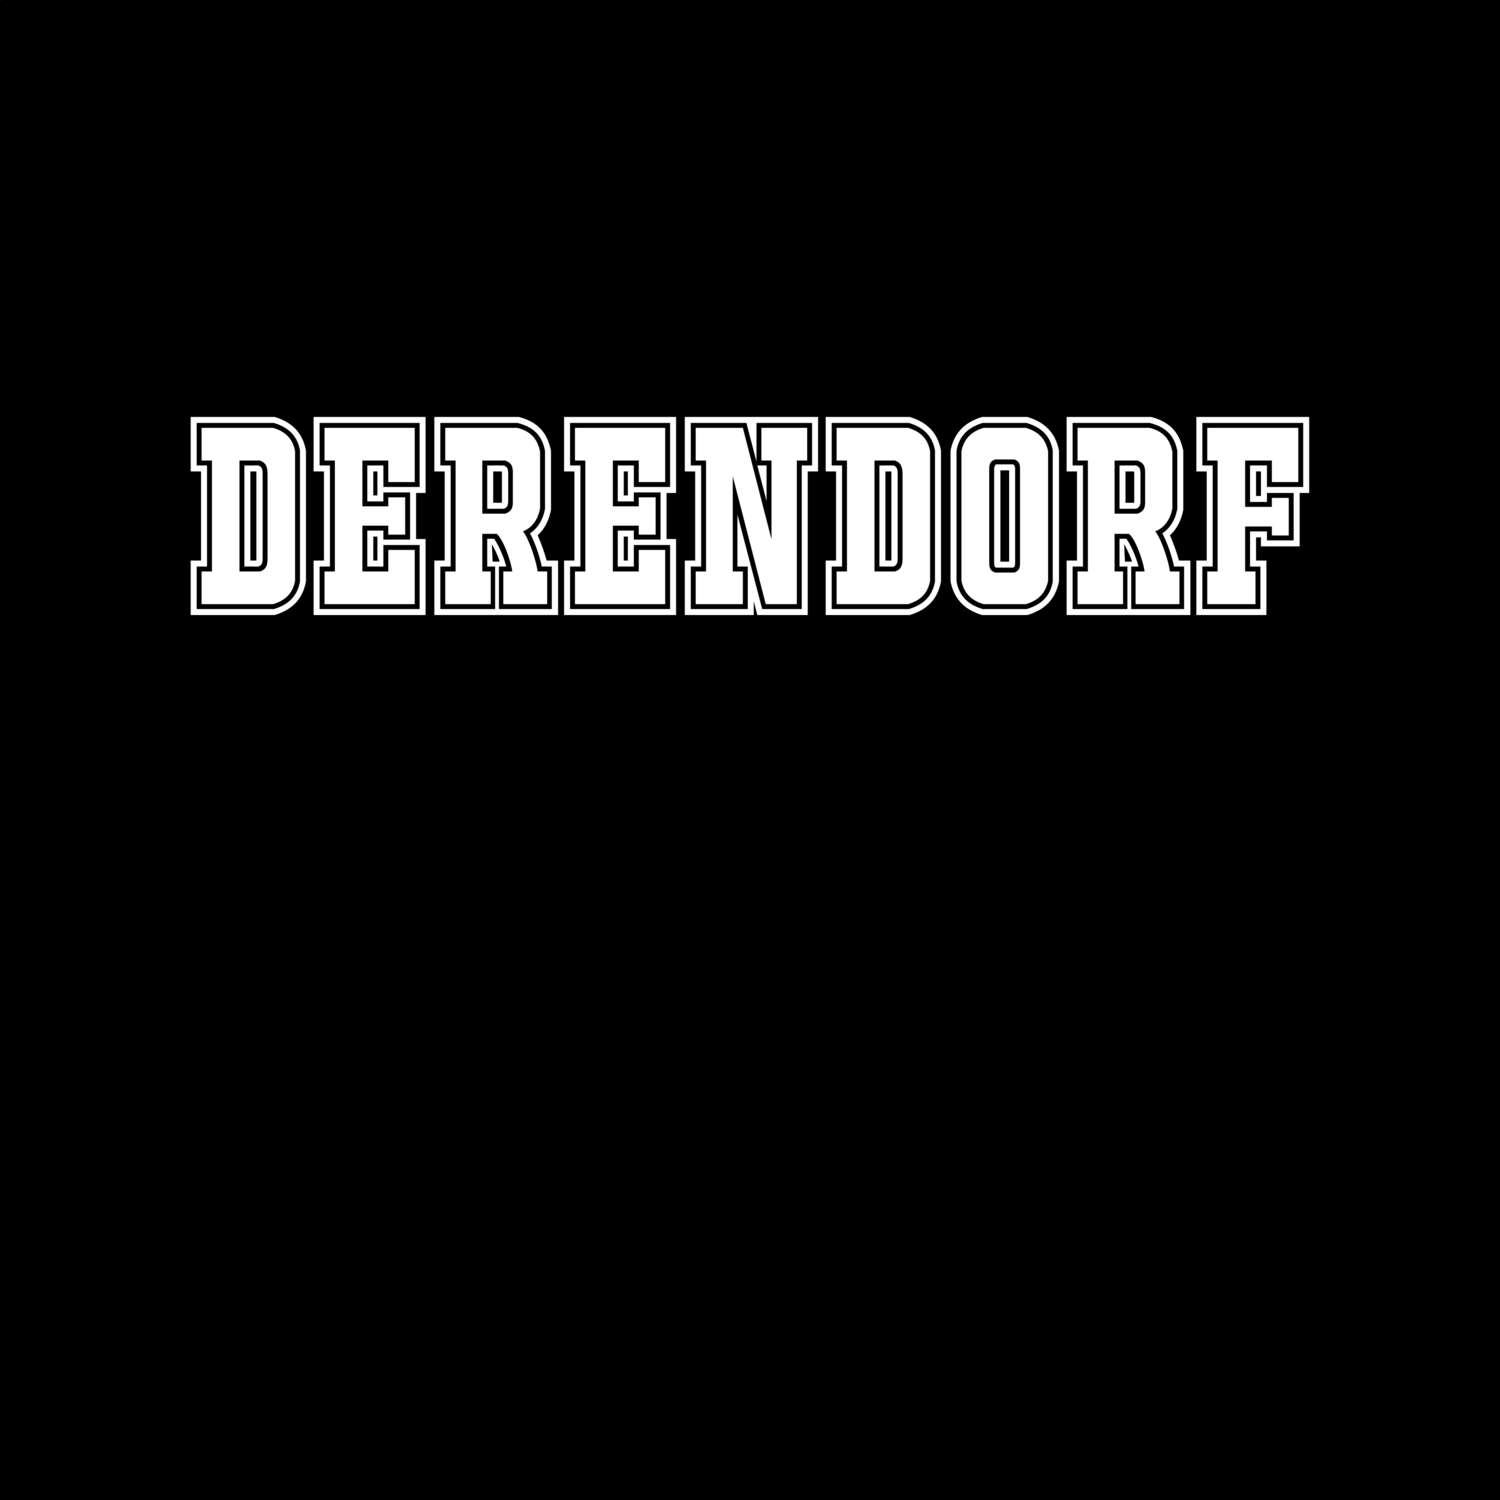 Derendorf T-Shirt »Classic«